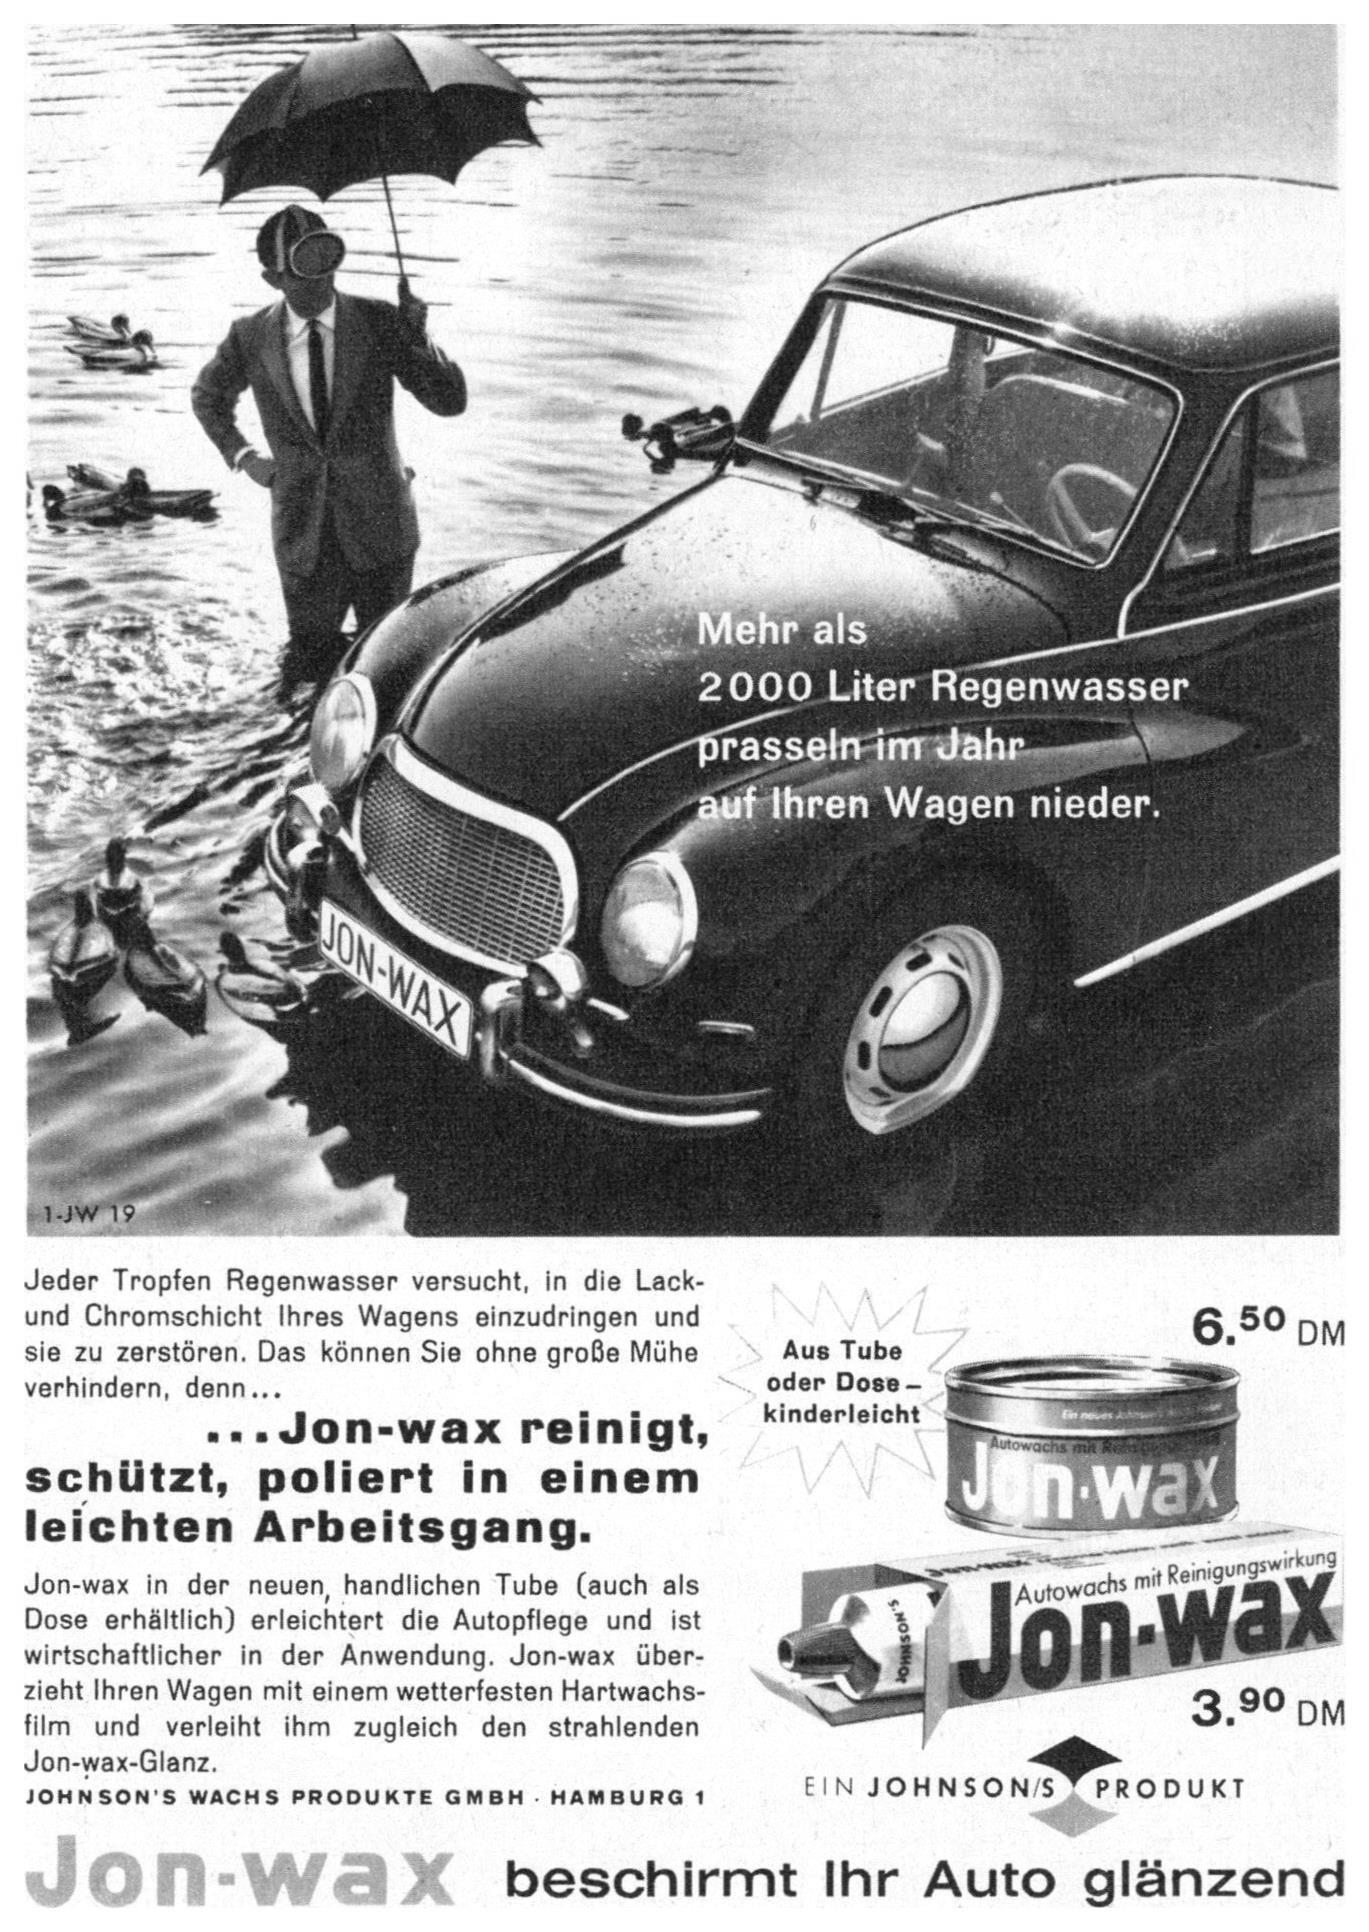 Jon-wax 1961 0.jpg